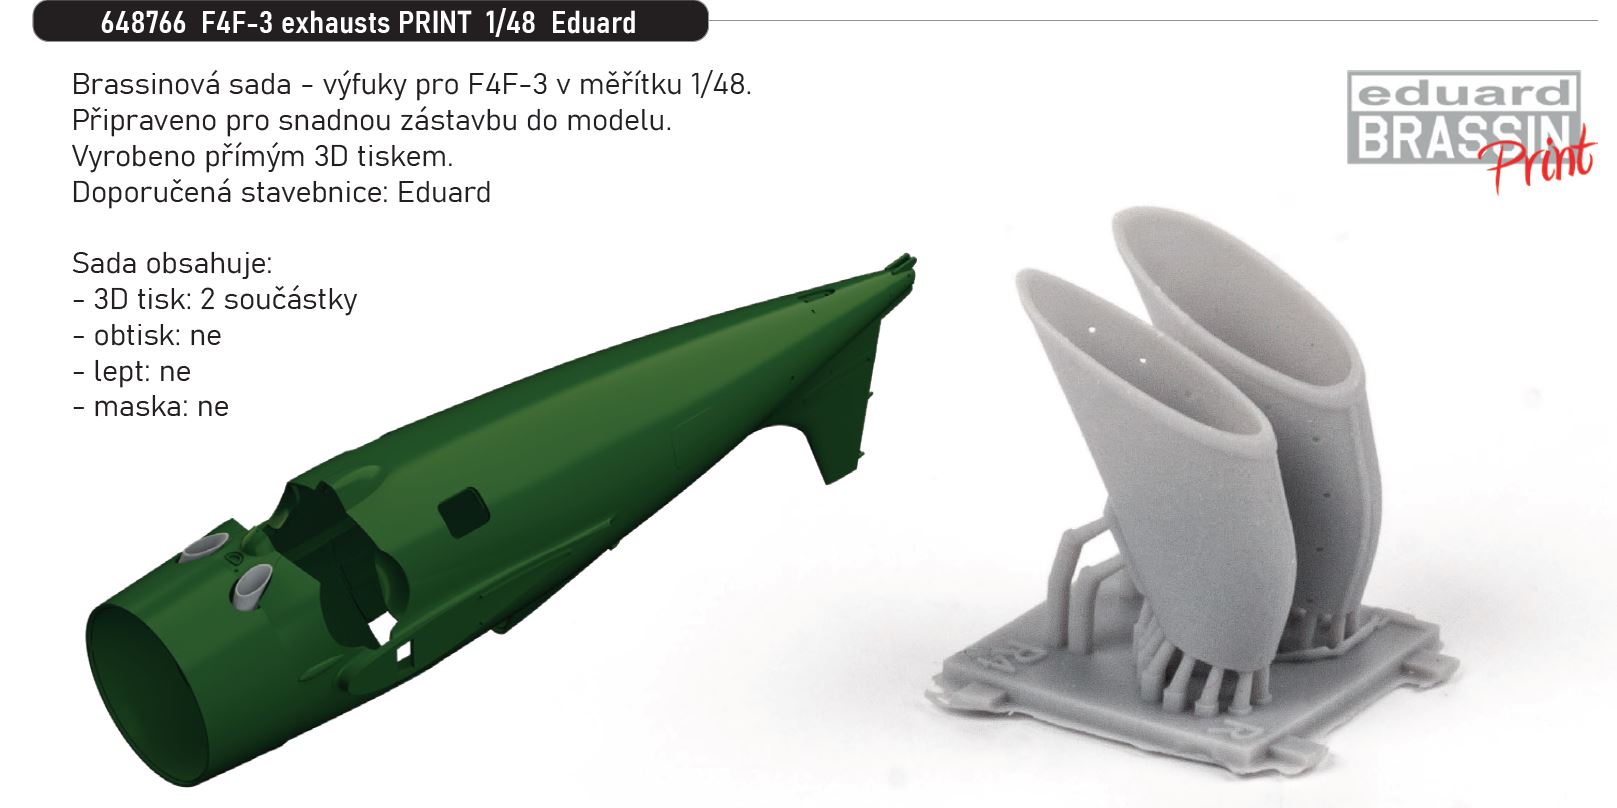 1/48 F4F-3 exhausts PRINT (EDUARD)